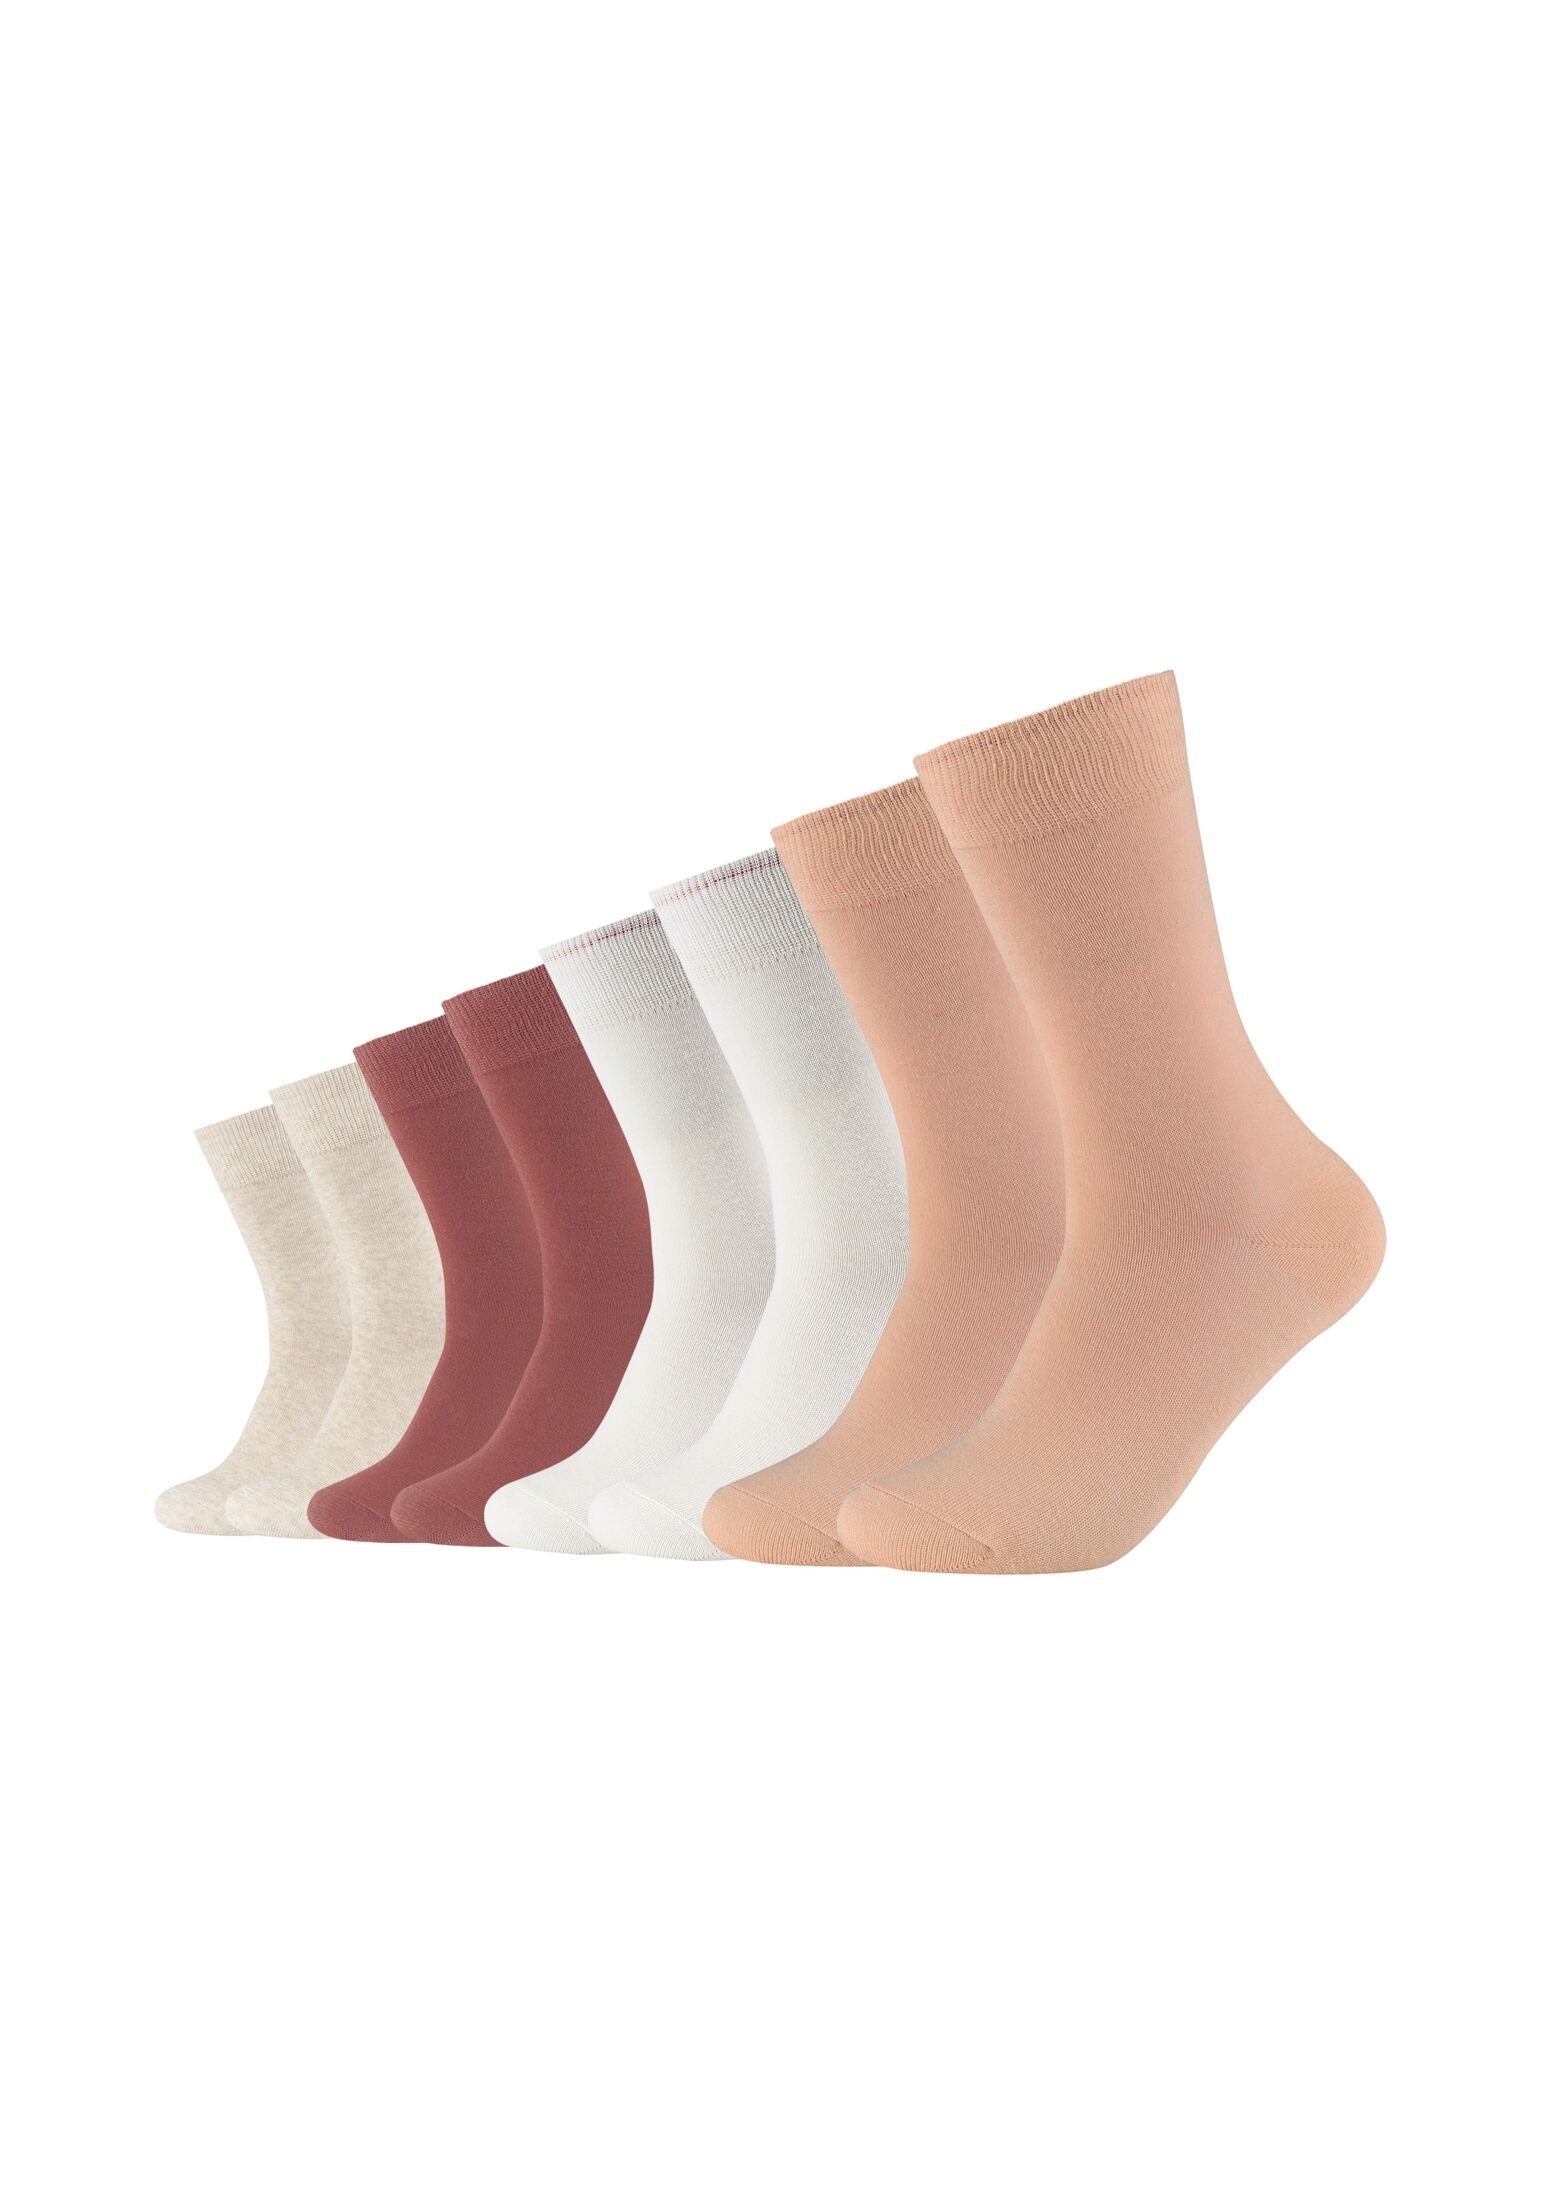 s.Oliver Socken Socken 8er Pack pink sand | Lange Socken